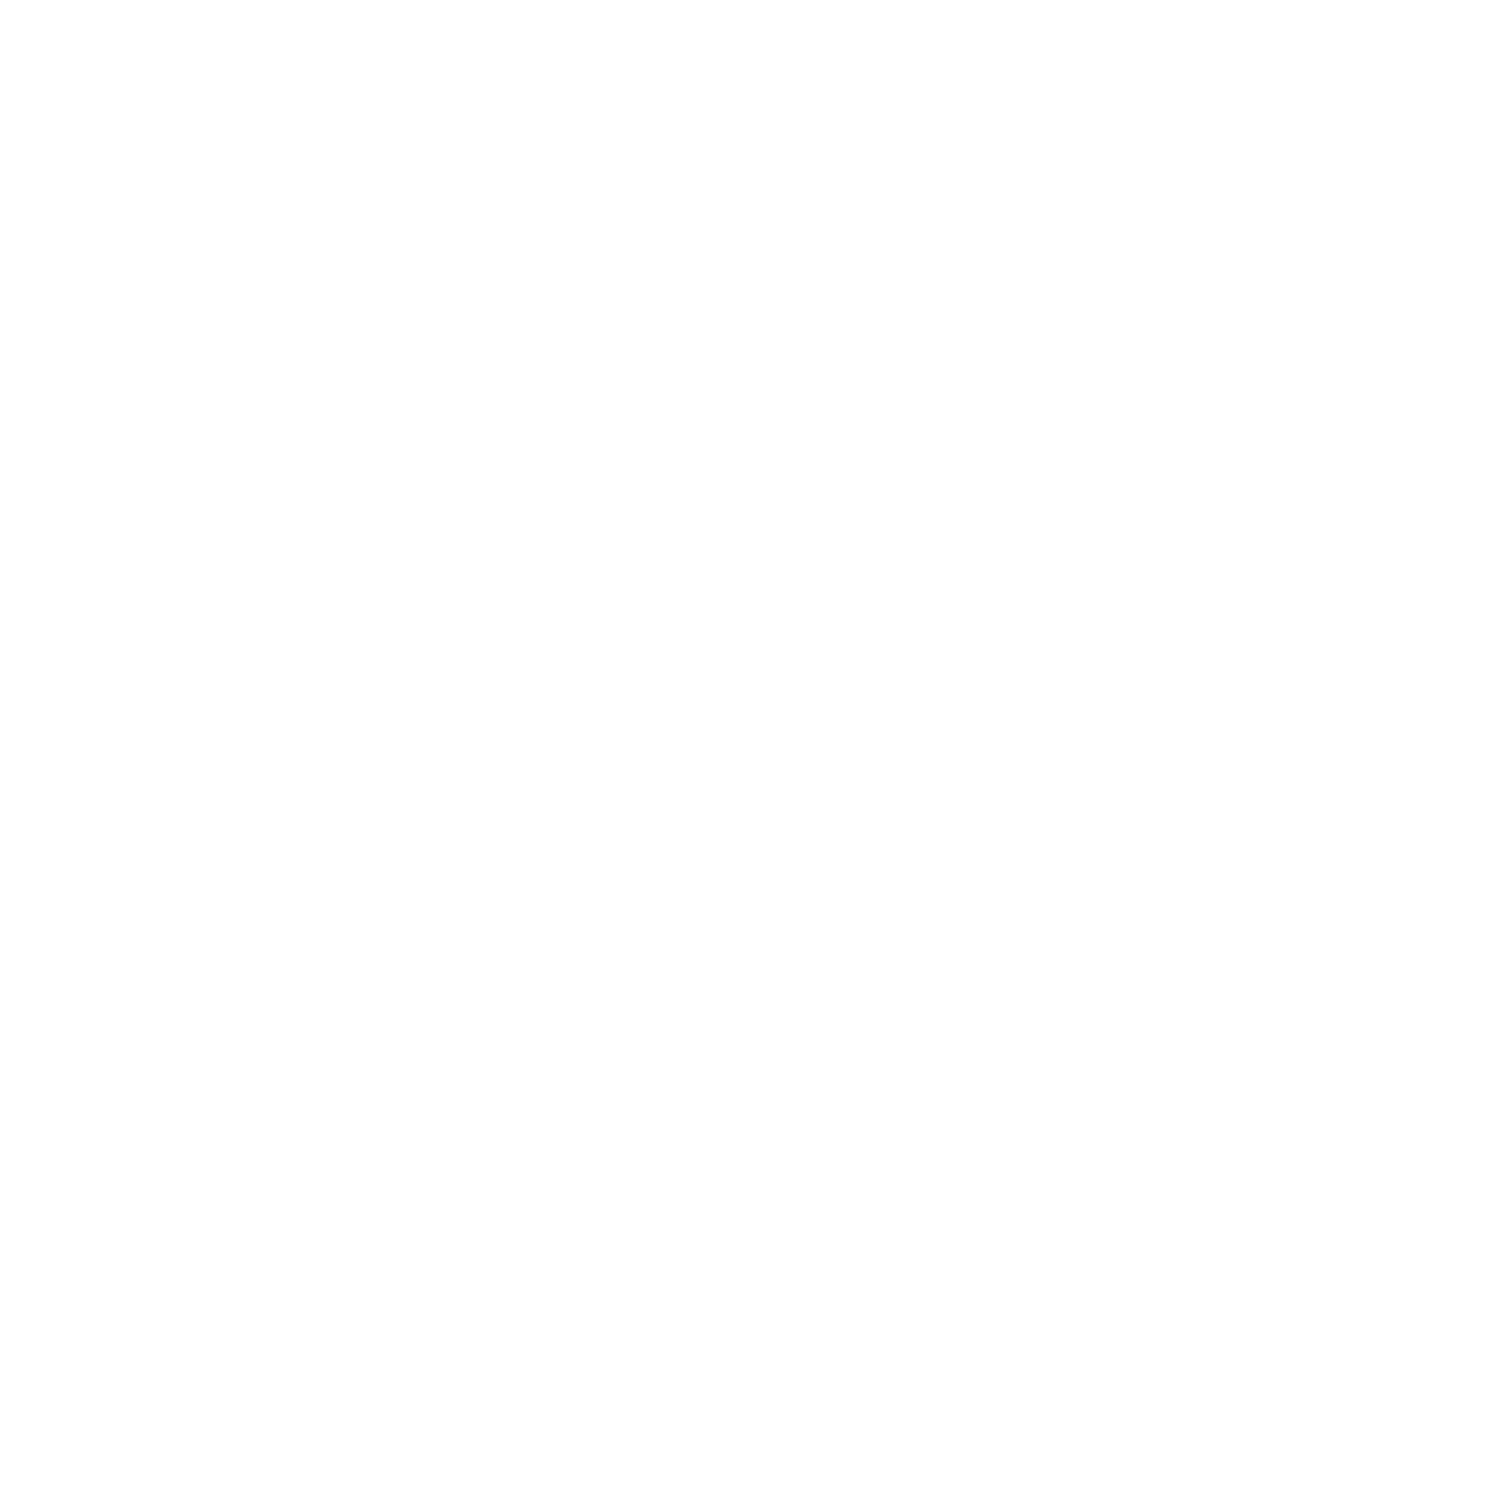 Lauren Shrader